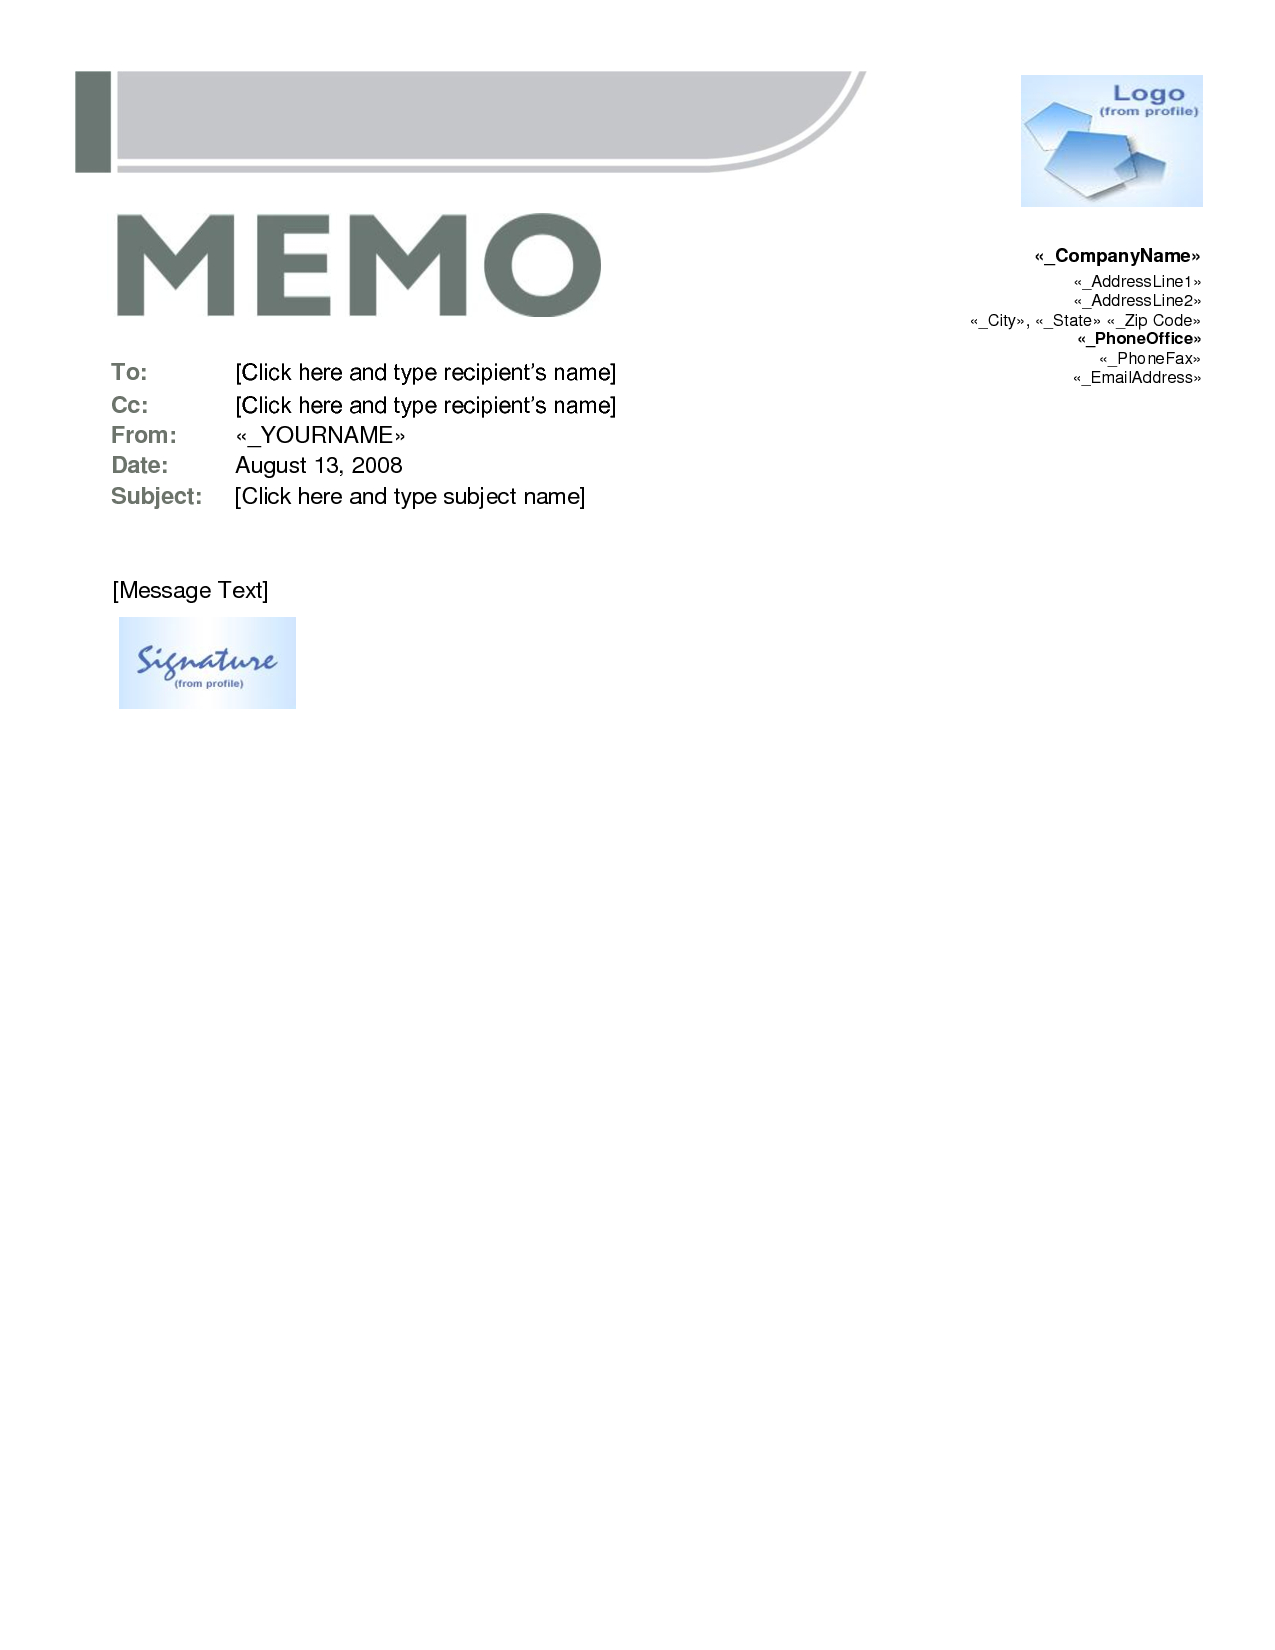 Memo Template Word | E Commercewordpress Pertaining To Memo Template Word 2010